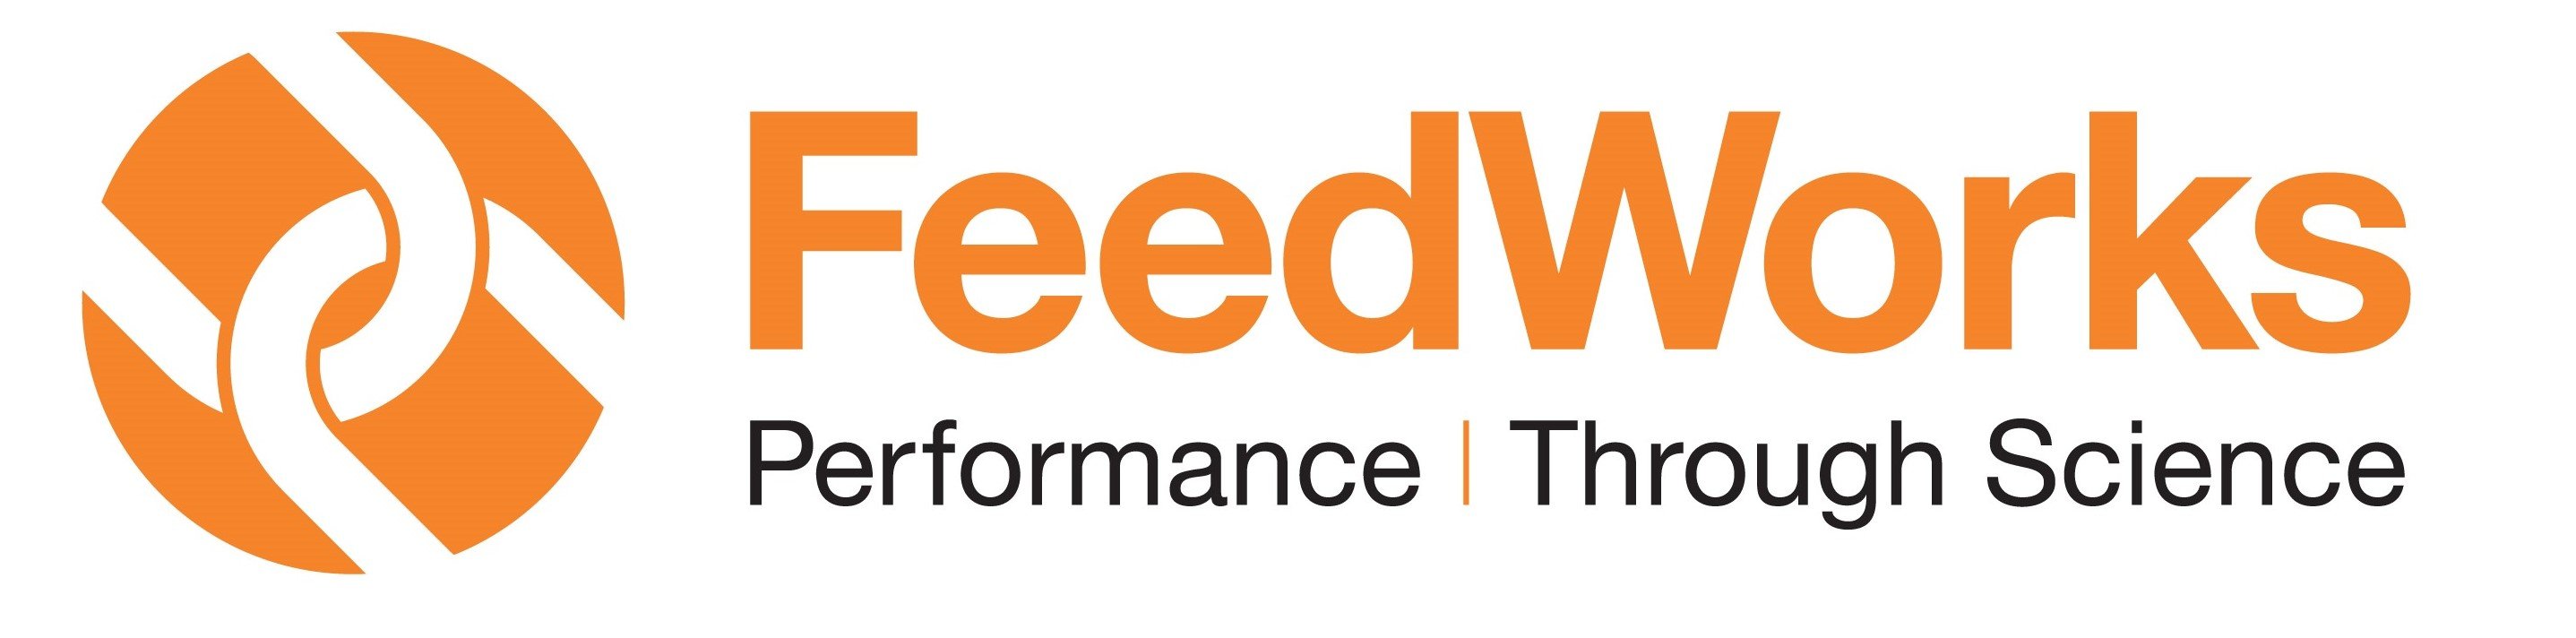 LogoFeedWorks.jpg